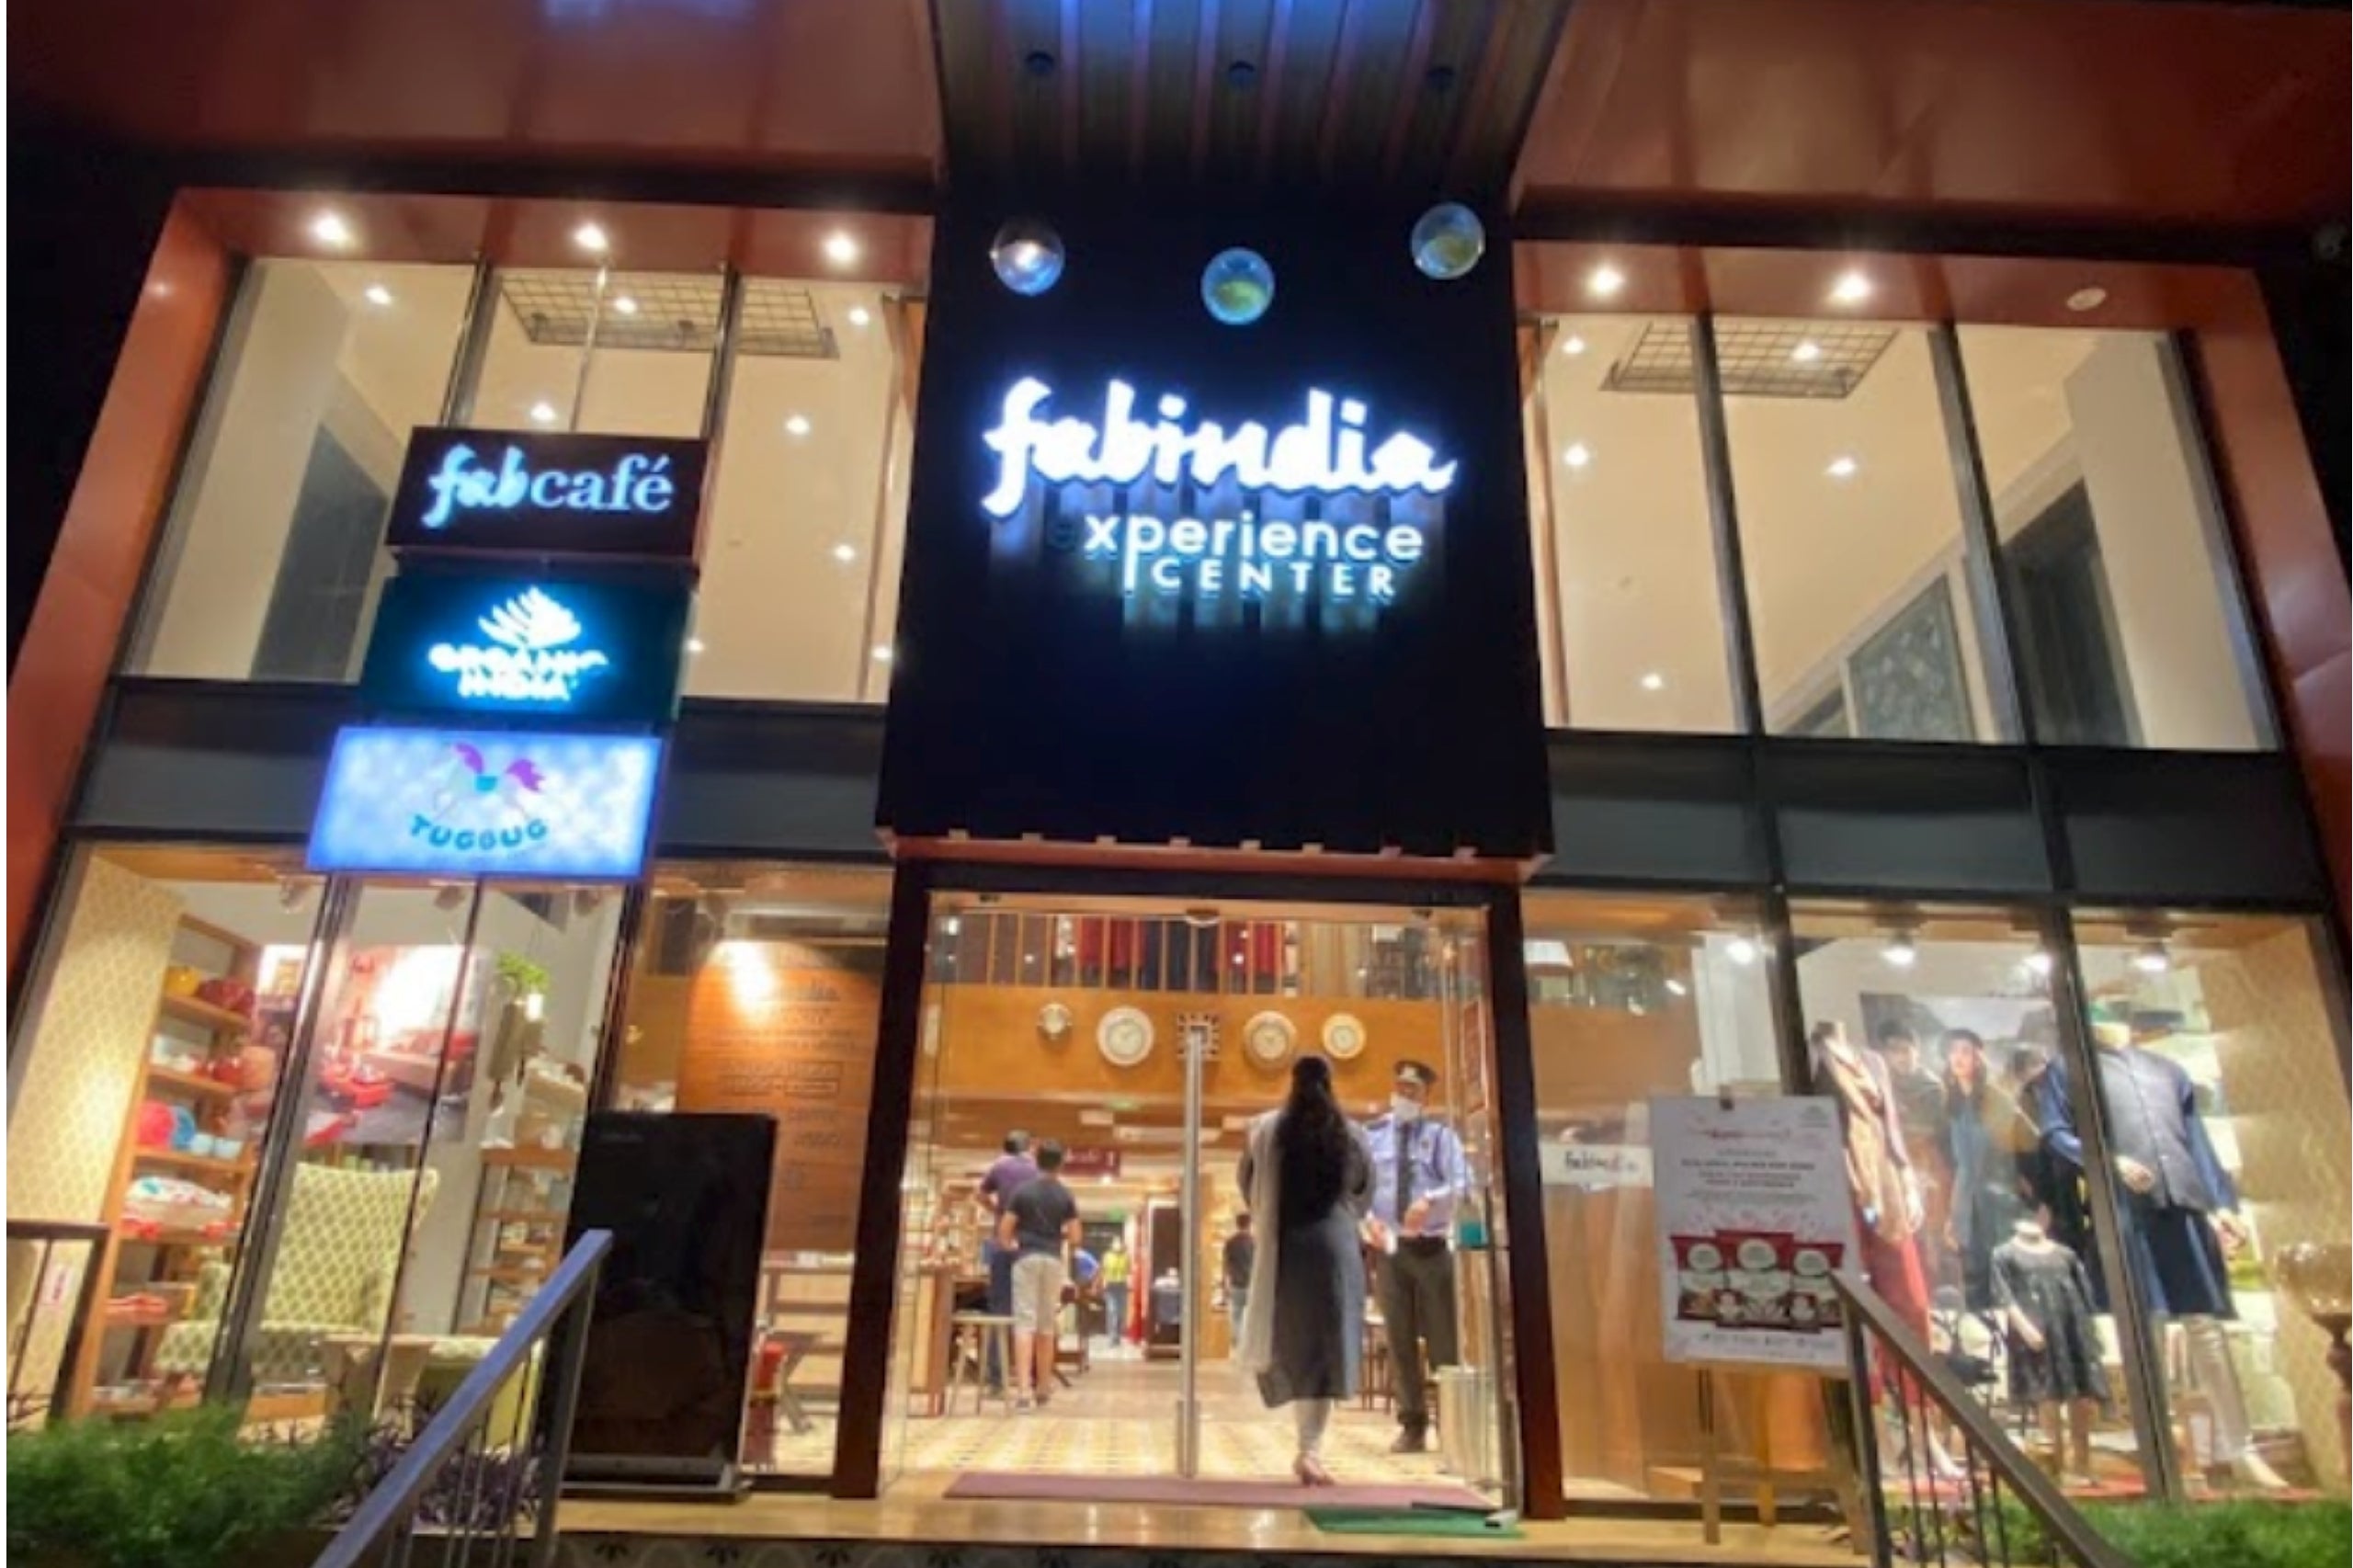 Fabindia Experience Center